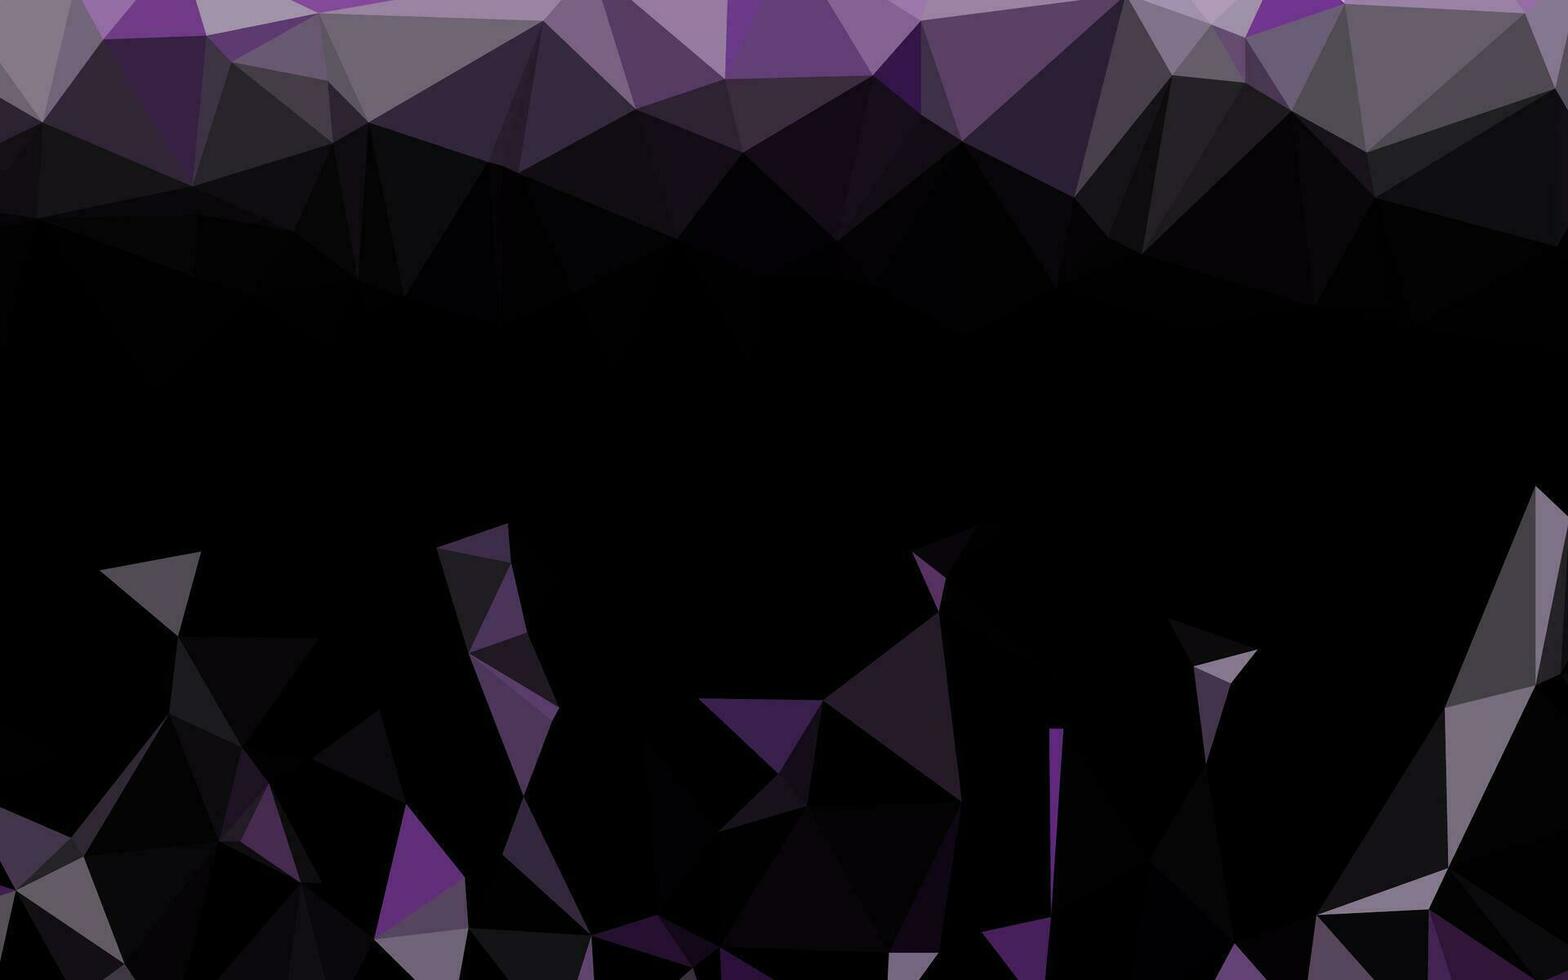 Light Purple vector blurry triangle template.